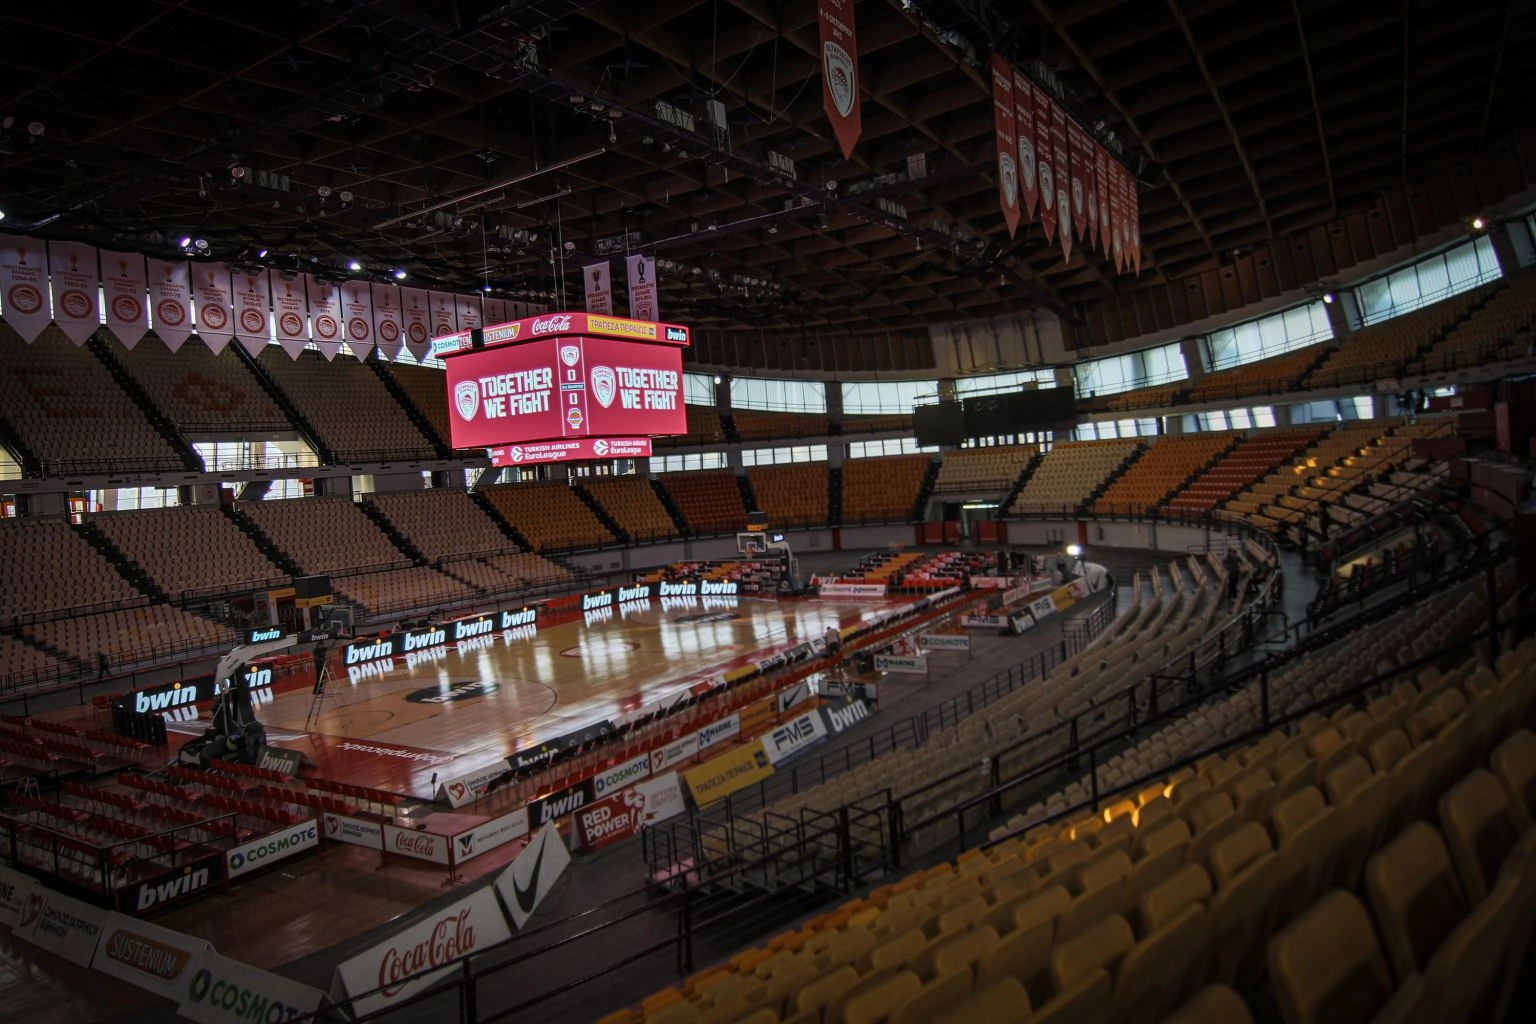 Olypiacos Arena